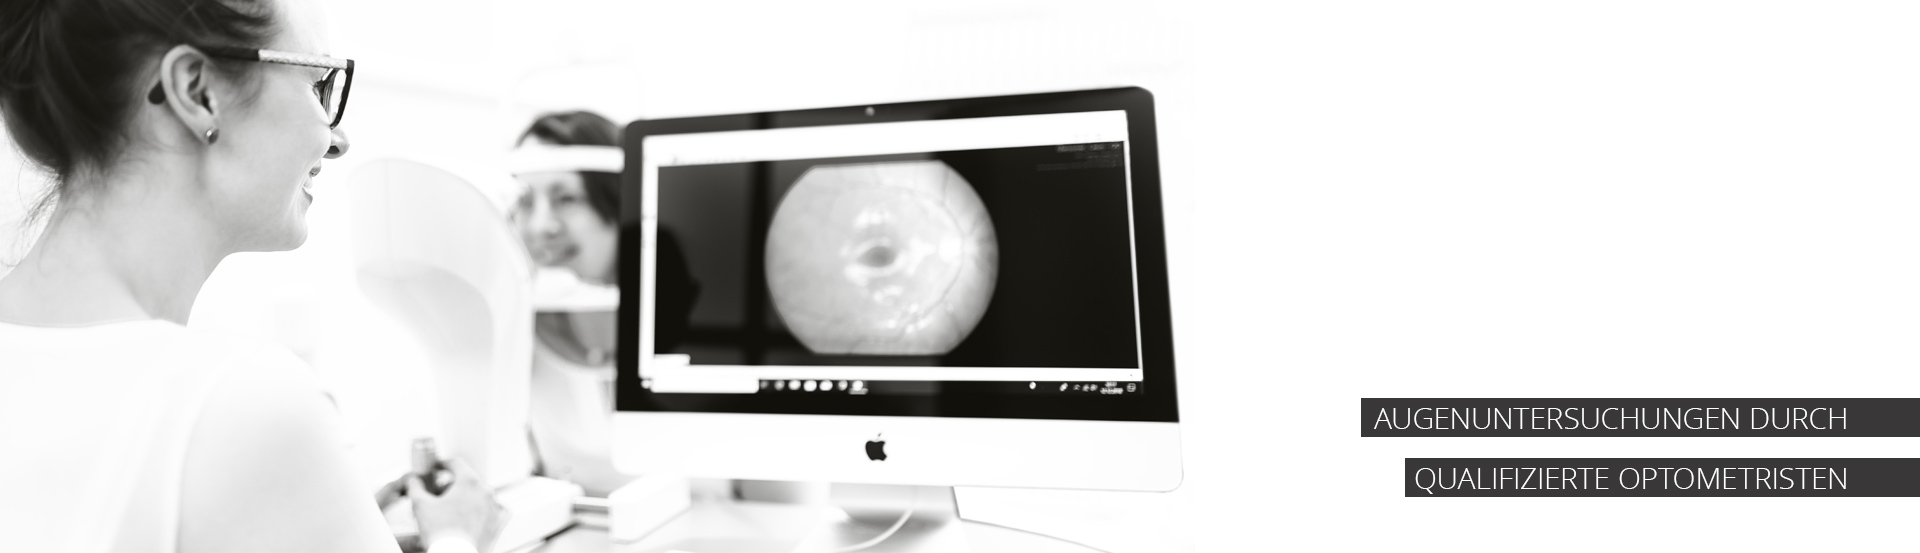 Augenglasbestimmung in 3D - exklusiv bei Augenoptik Sandow